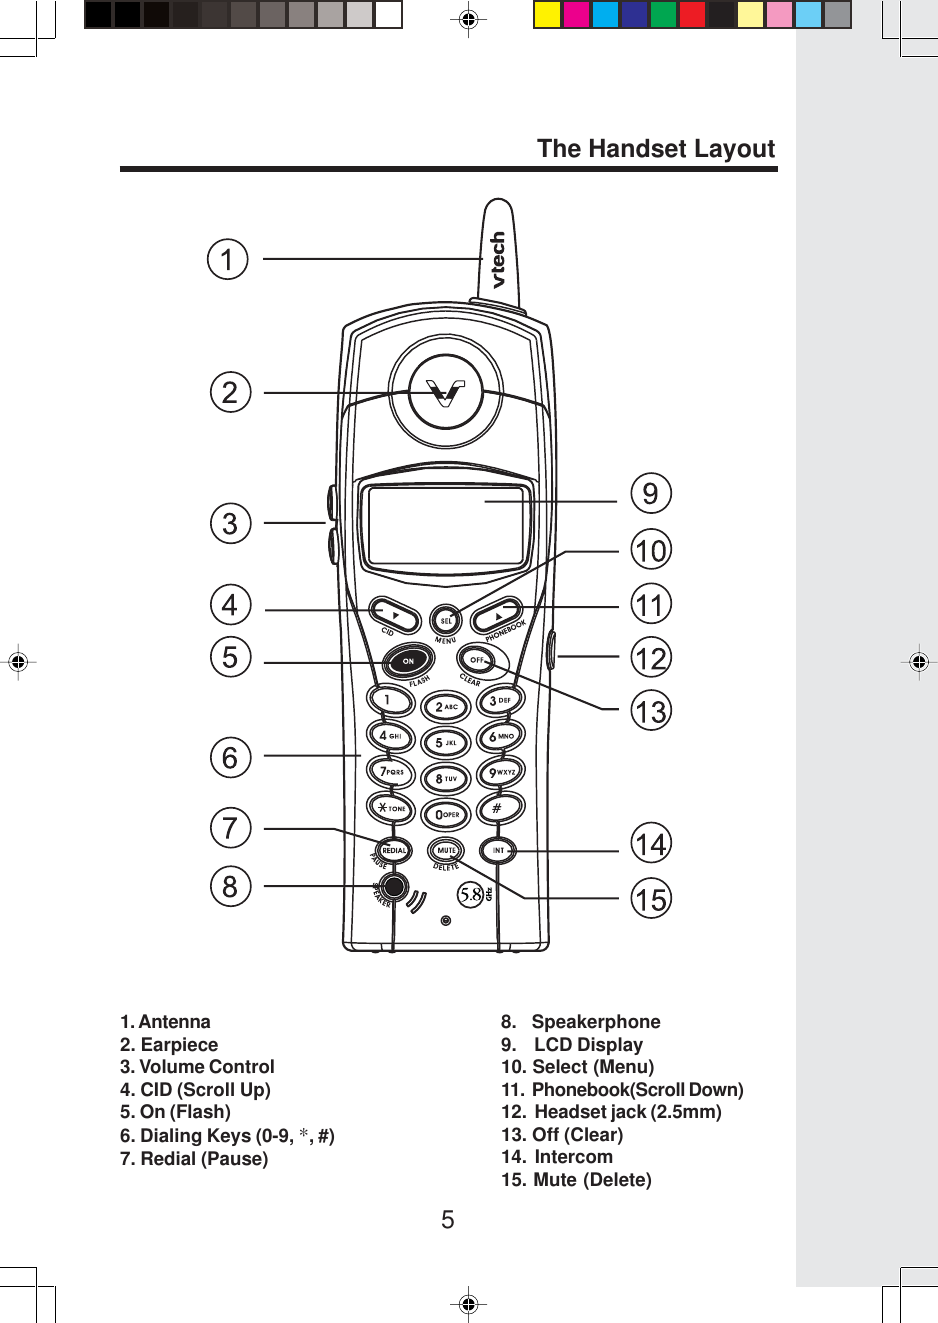 51. Antenna2. Earpiece3. Volume Control4. CID (Scroll Up)5. On (Flash)6. Dialing Keys (0-9, *, #)7. Redial (Pause)The Handset Layout8.   Speakerphone9.    LCD Display10. Select (Menu)11.  Phonebook(Scroll Down)12.  Headset jack (2.5mm)13. Off (Clear)14.  Intercom15. Mute (Delete)